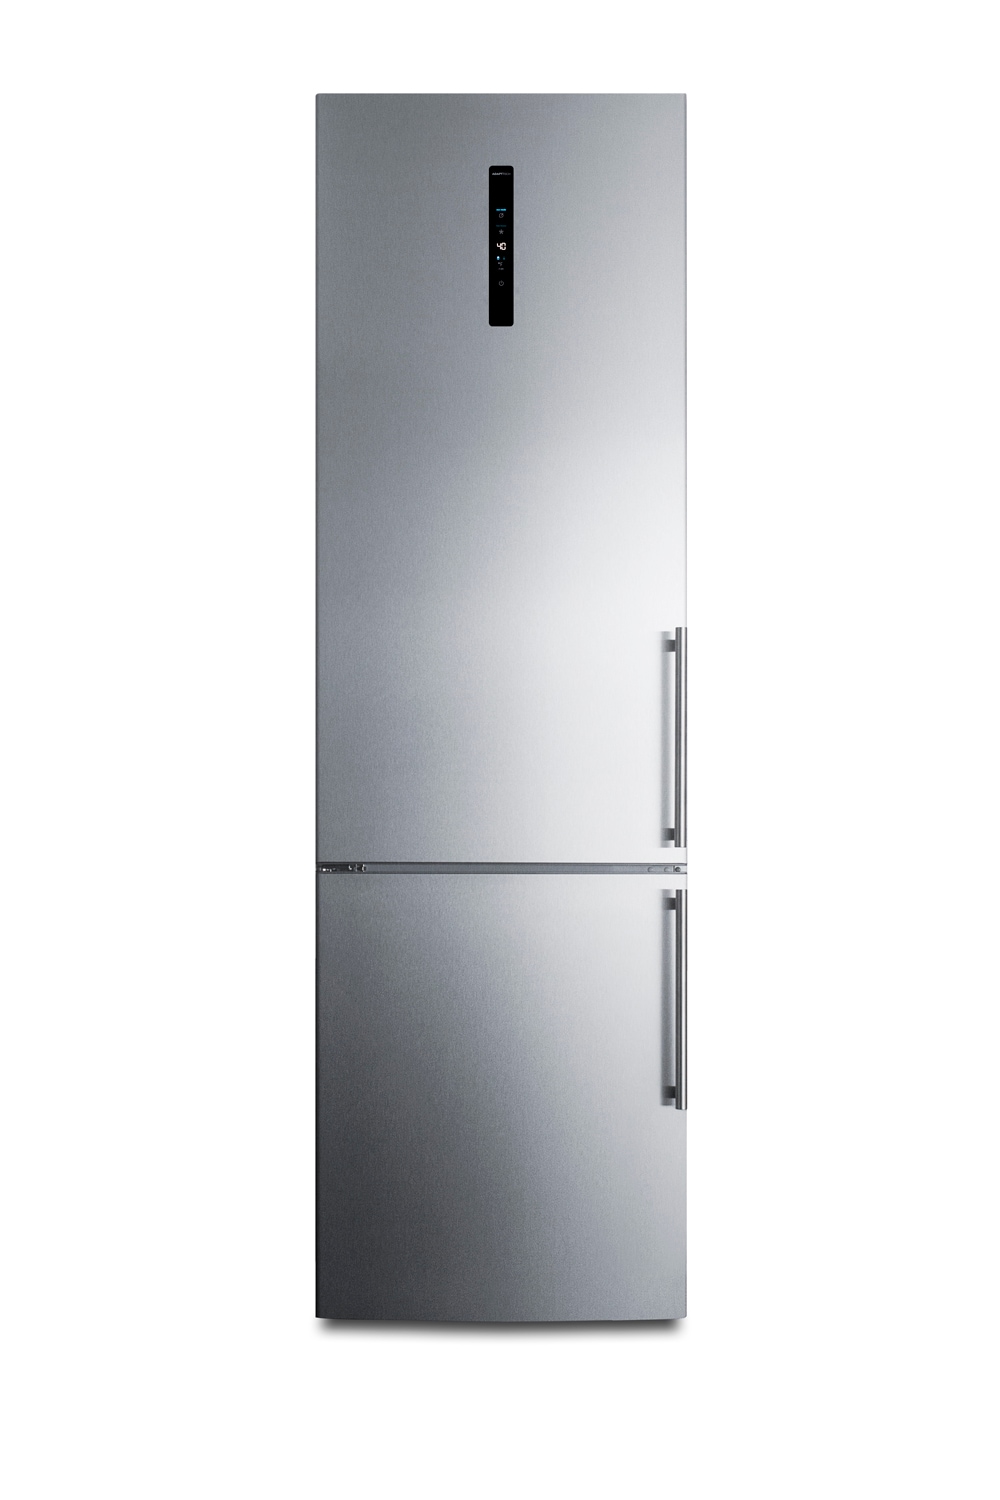 Summit Appliance Refrigerators at